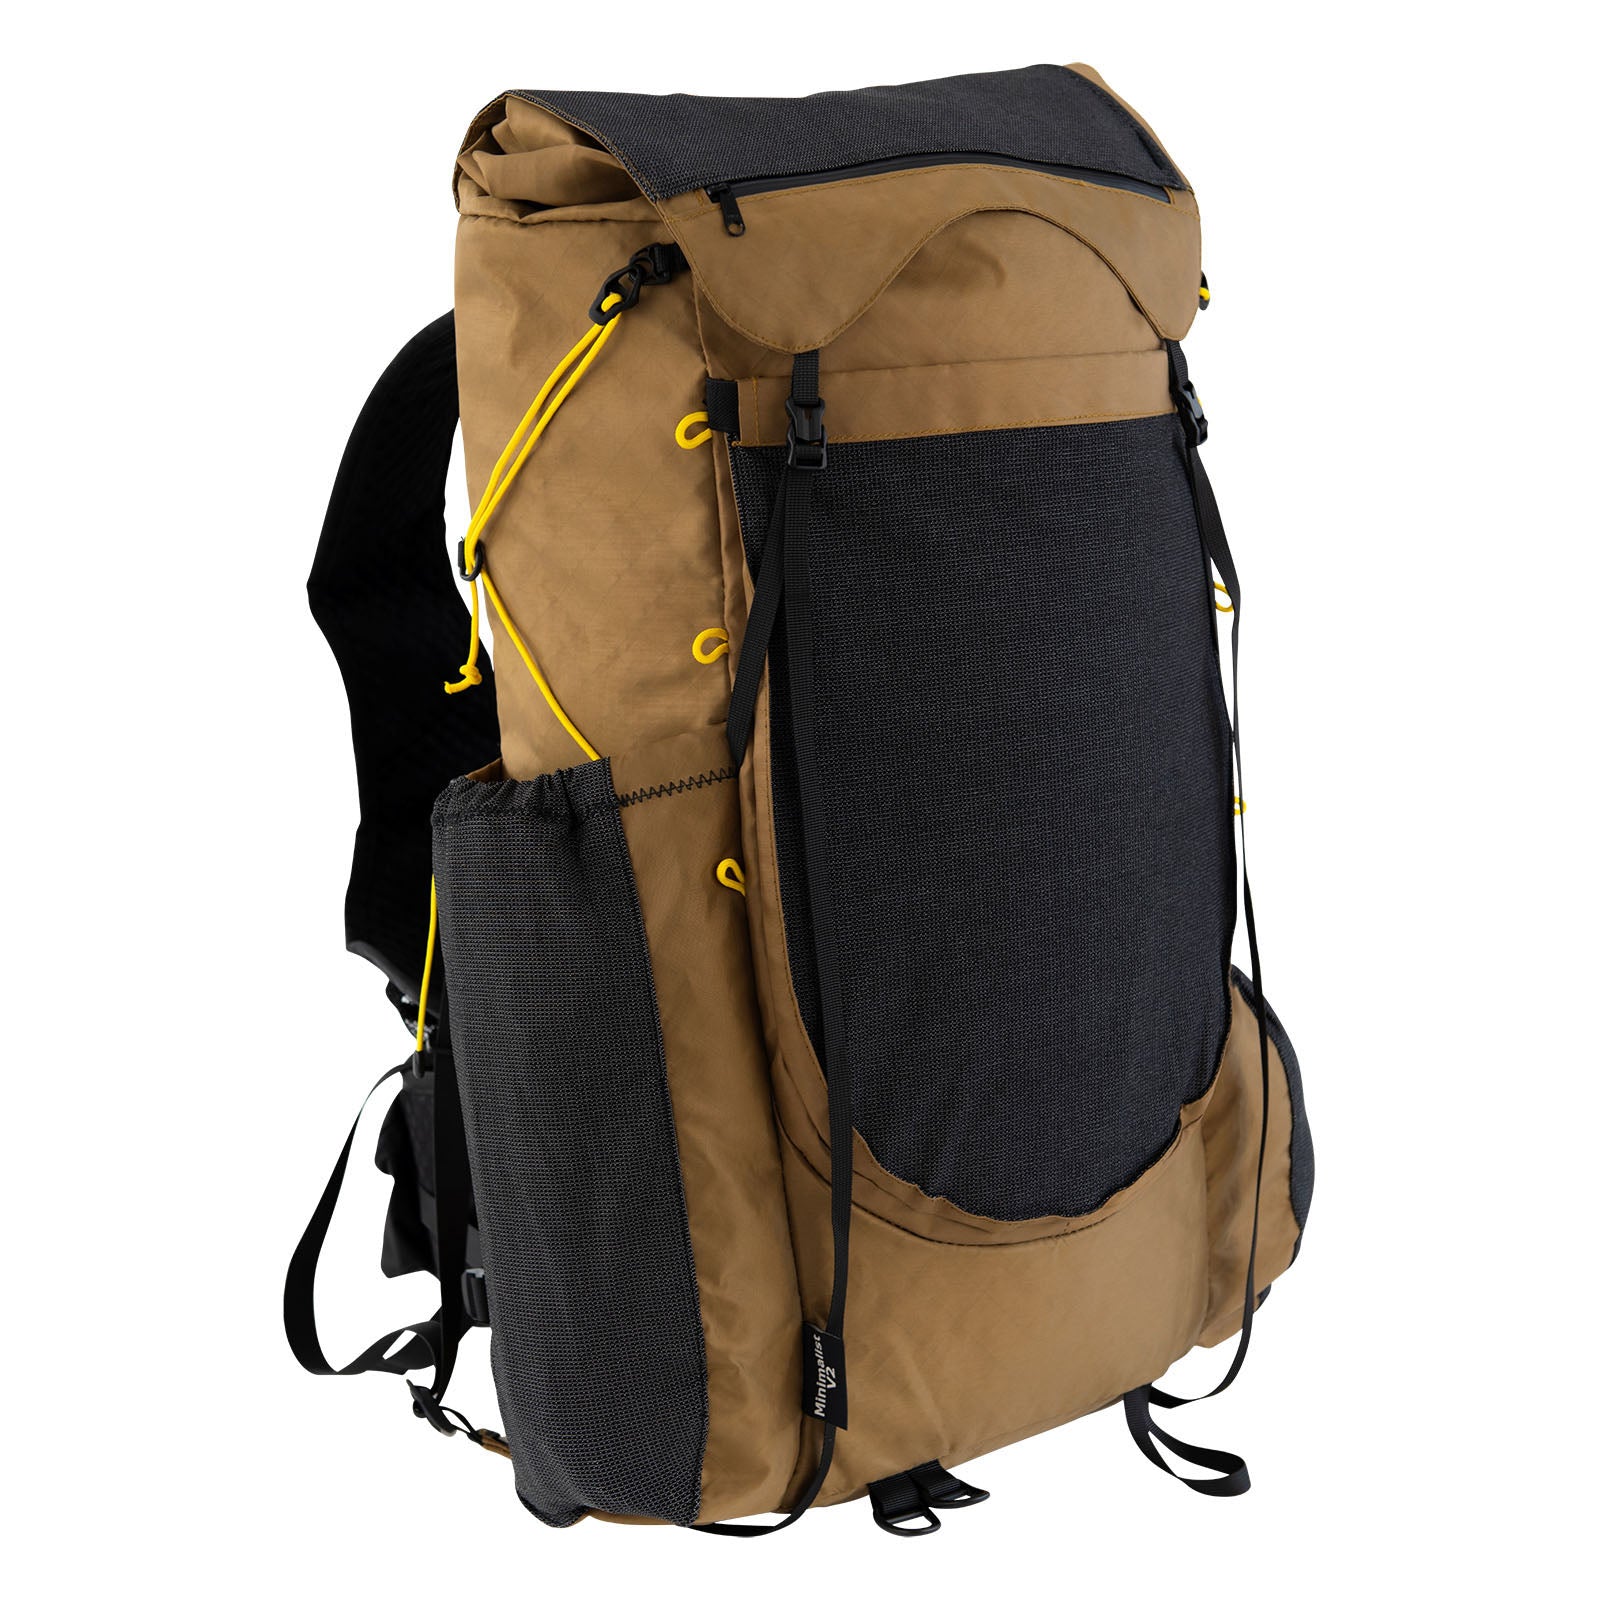 Apollo Walker Backpack Canvas Gray Multi-Pocket Comfortable